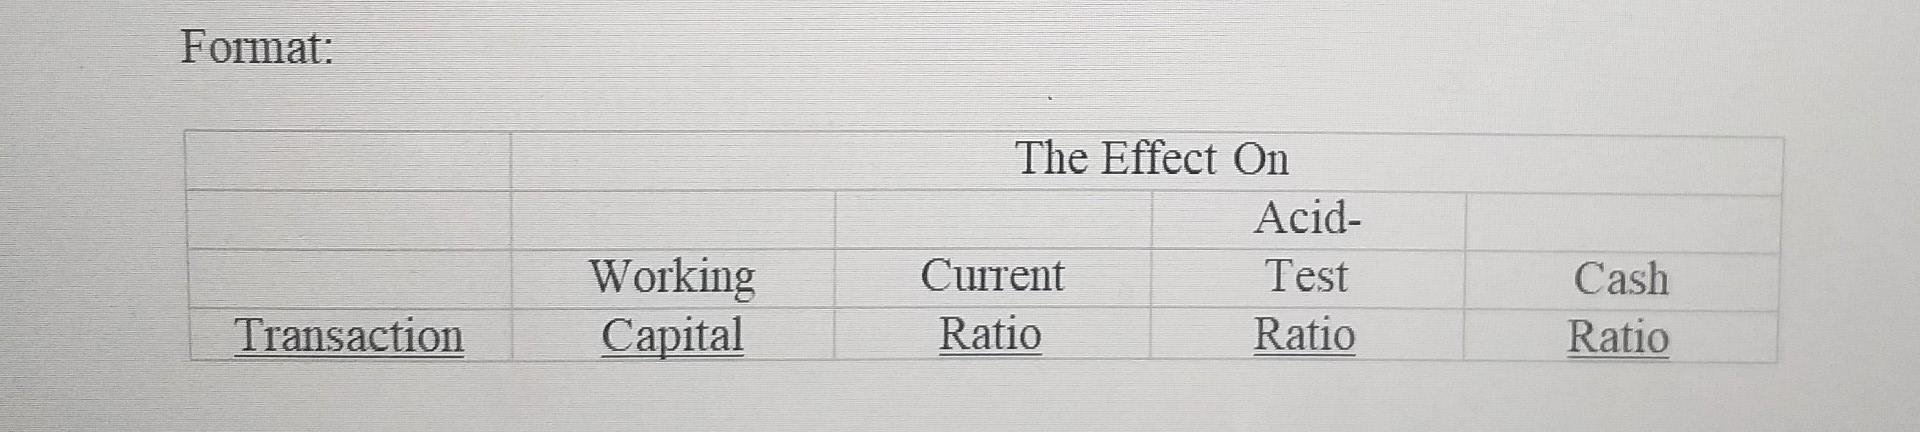 Format: The Effect On Acid- Current Test Ratio Ratio Working Capital Cash Ratio Transaction